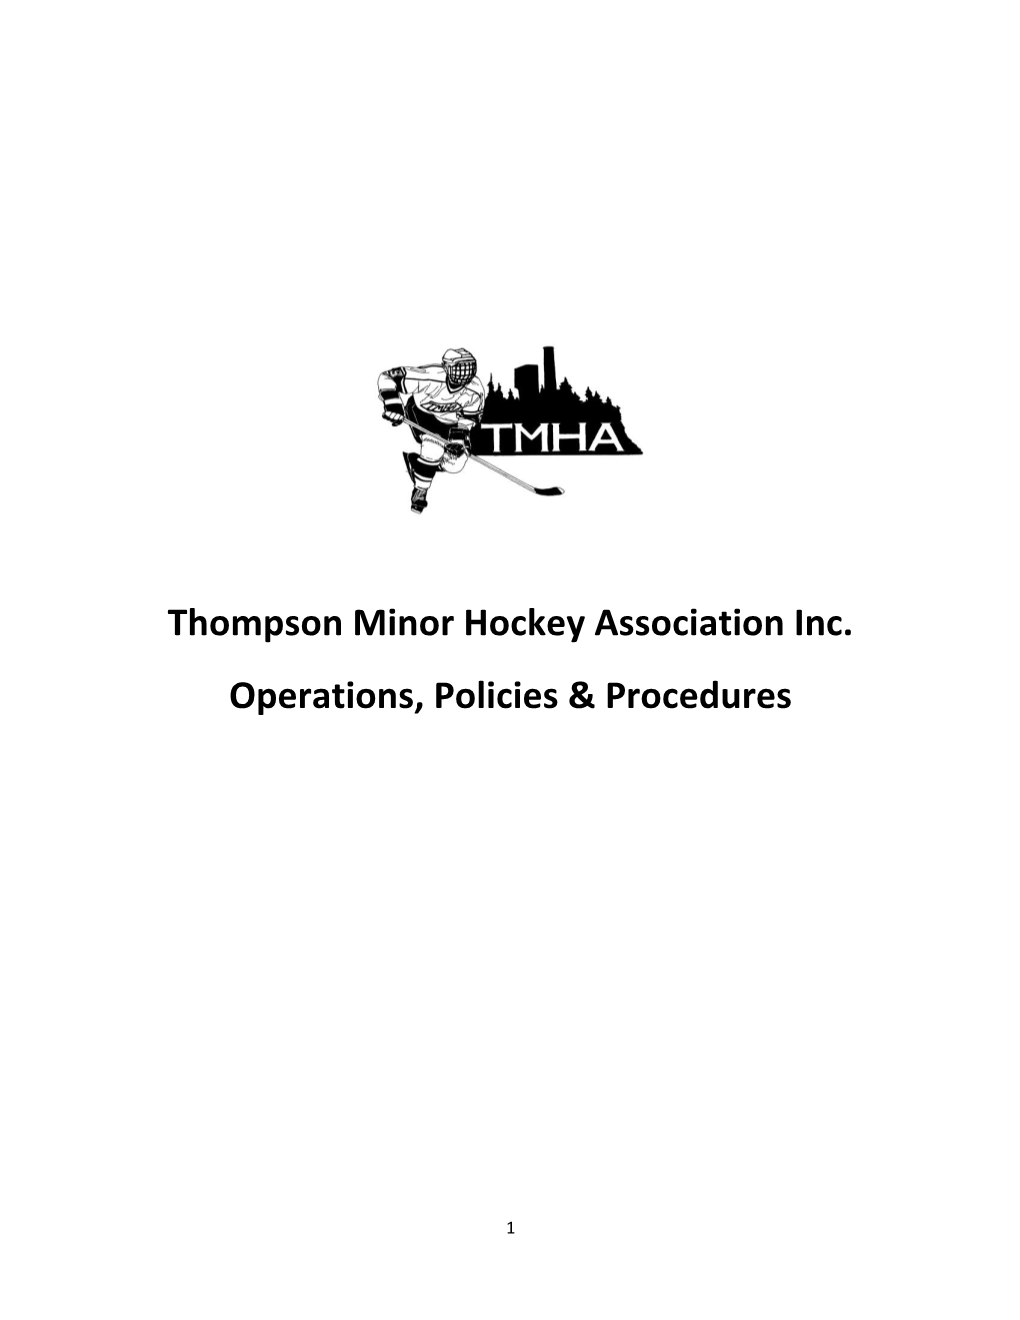 Thompson Minor Hockey Association Inc. Operations, Policies & Procedures